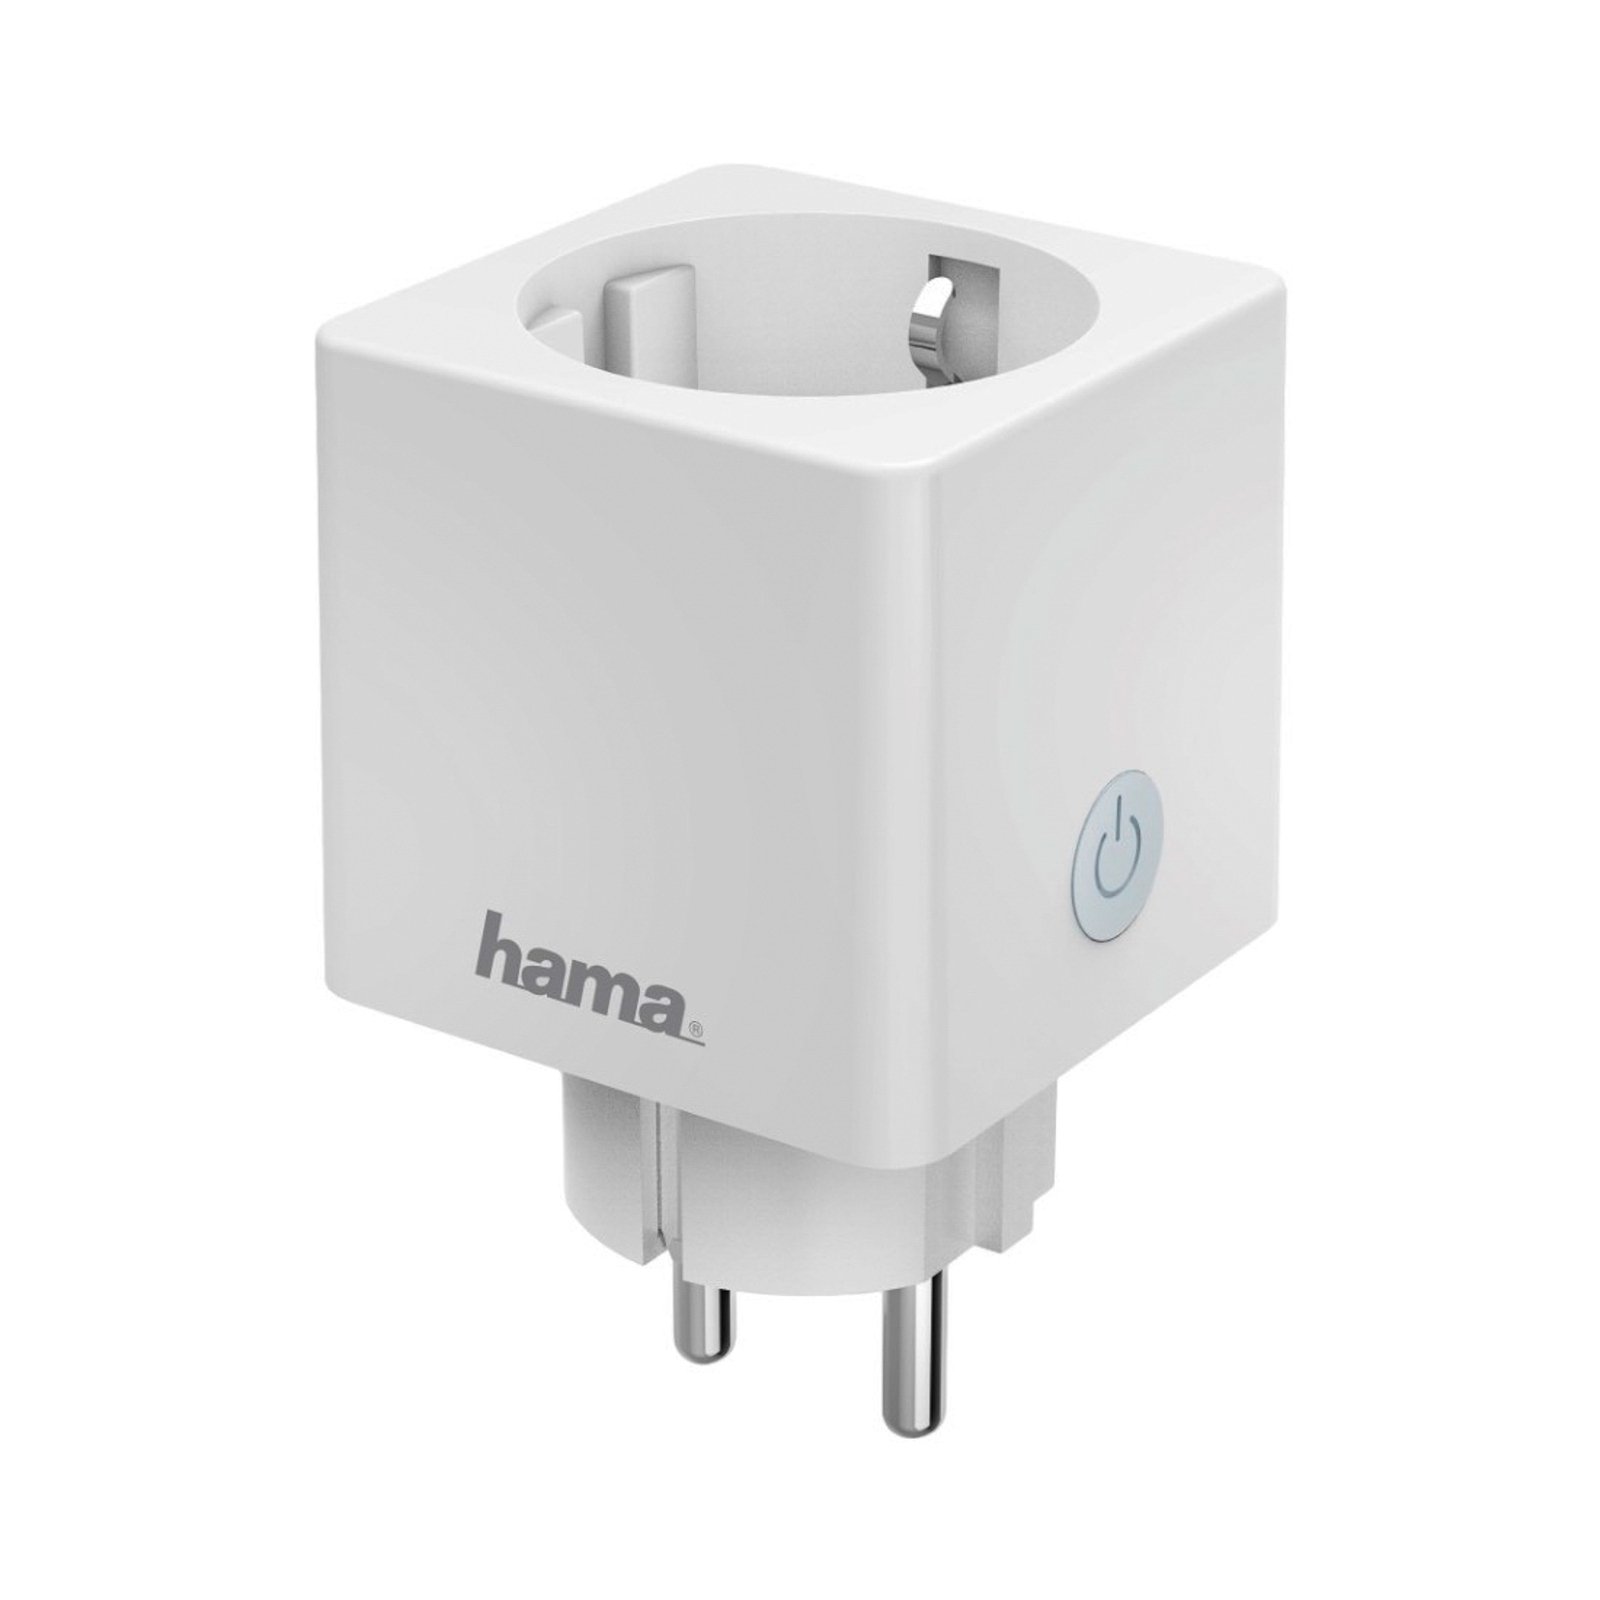 Hama Mini enchufe WLAN, control por app y voz